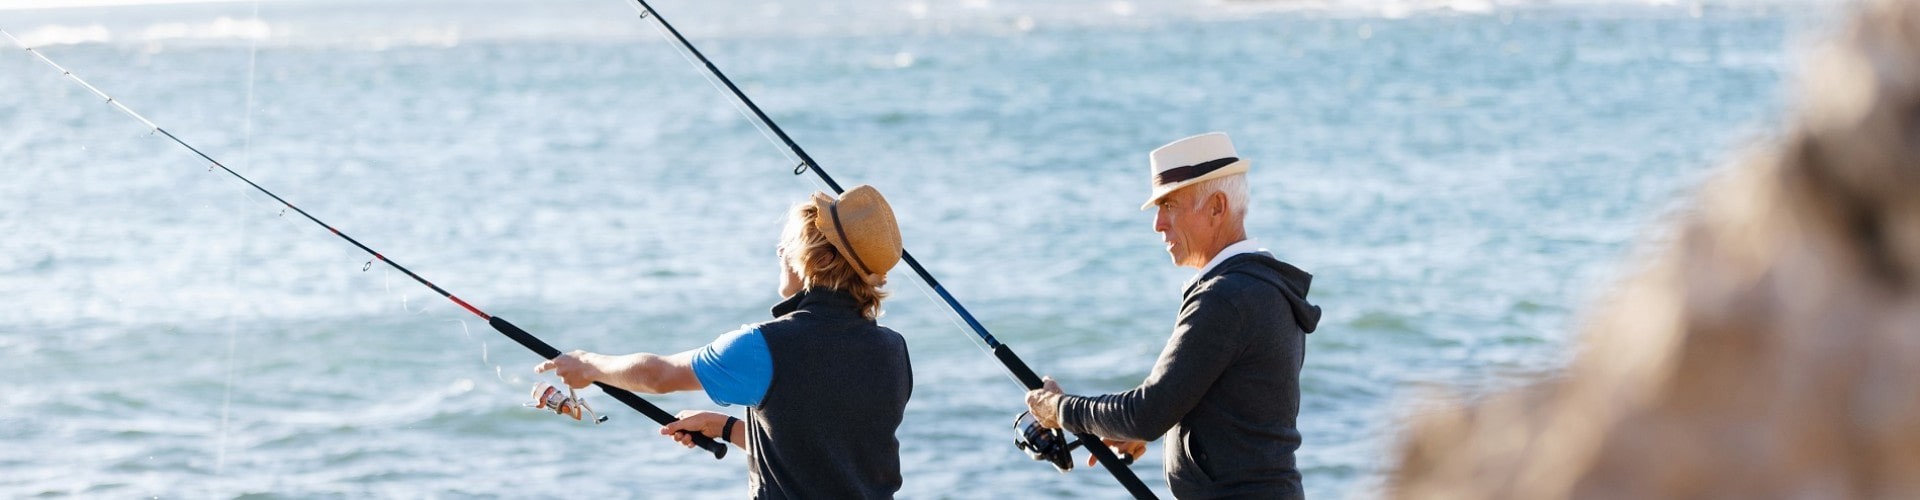 senior couple fishing at the ocean